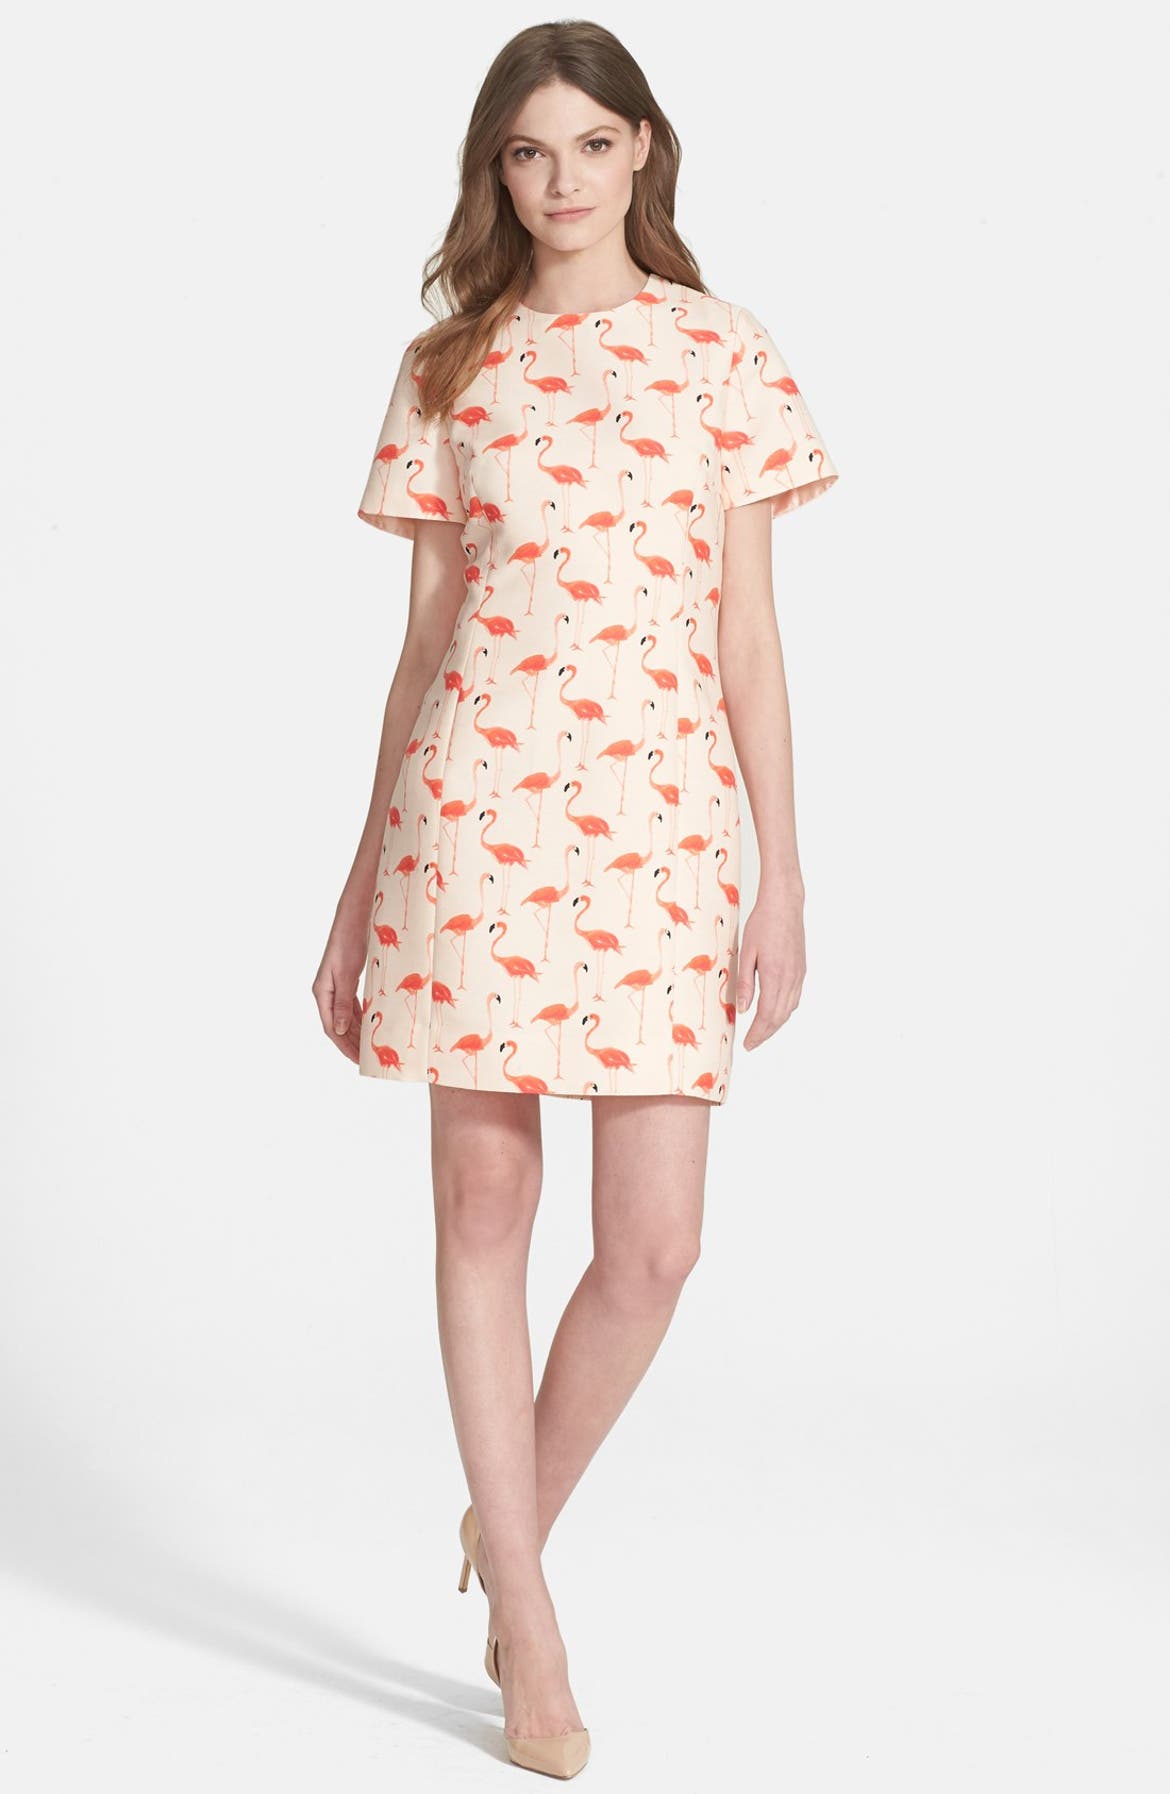 kate spade new york 'flamingo' sheath dress | Nordstrom